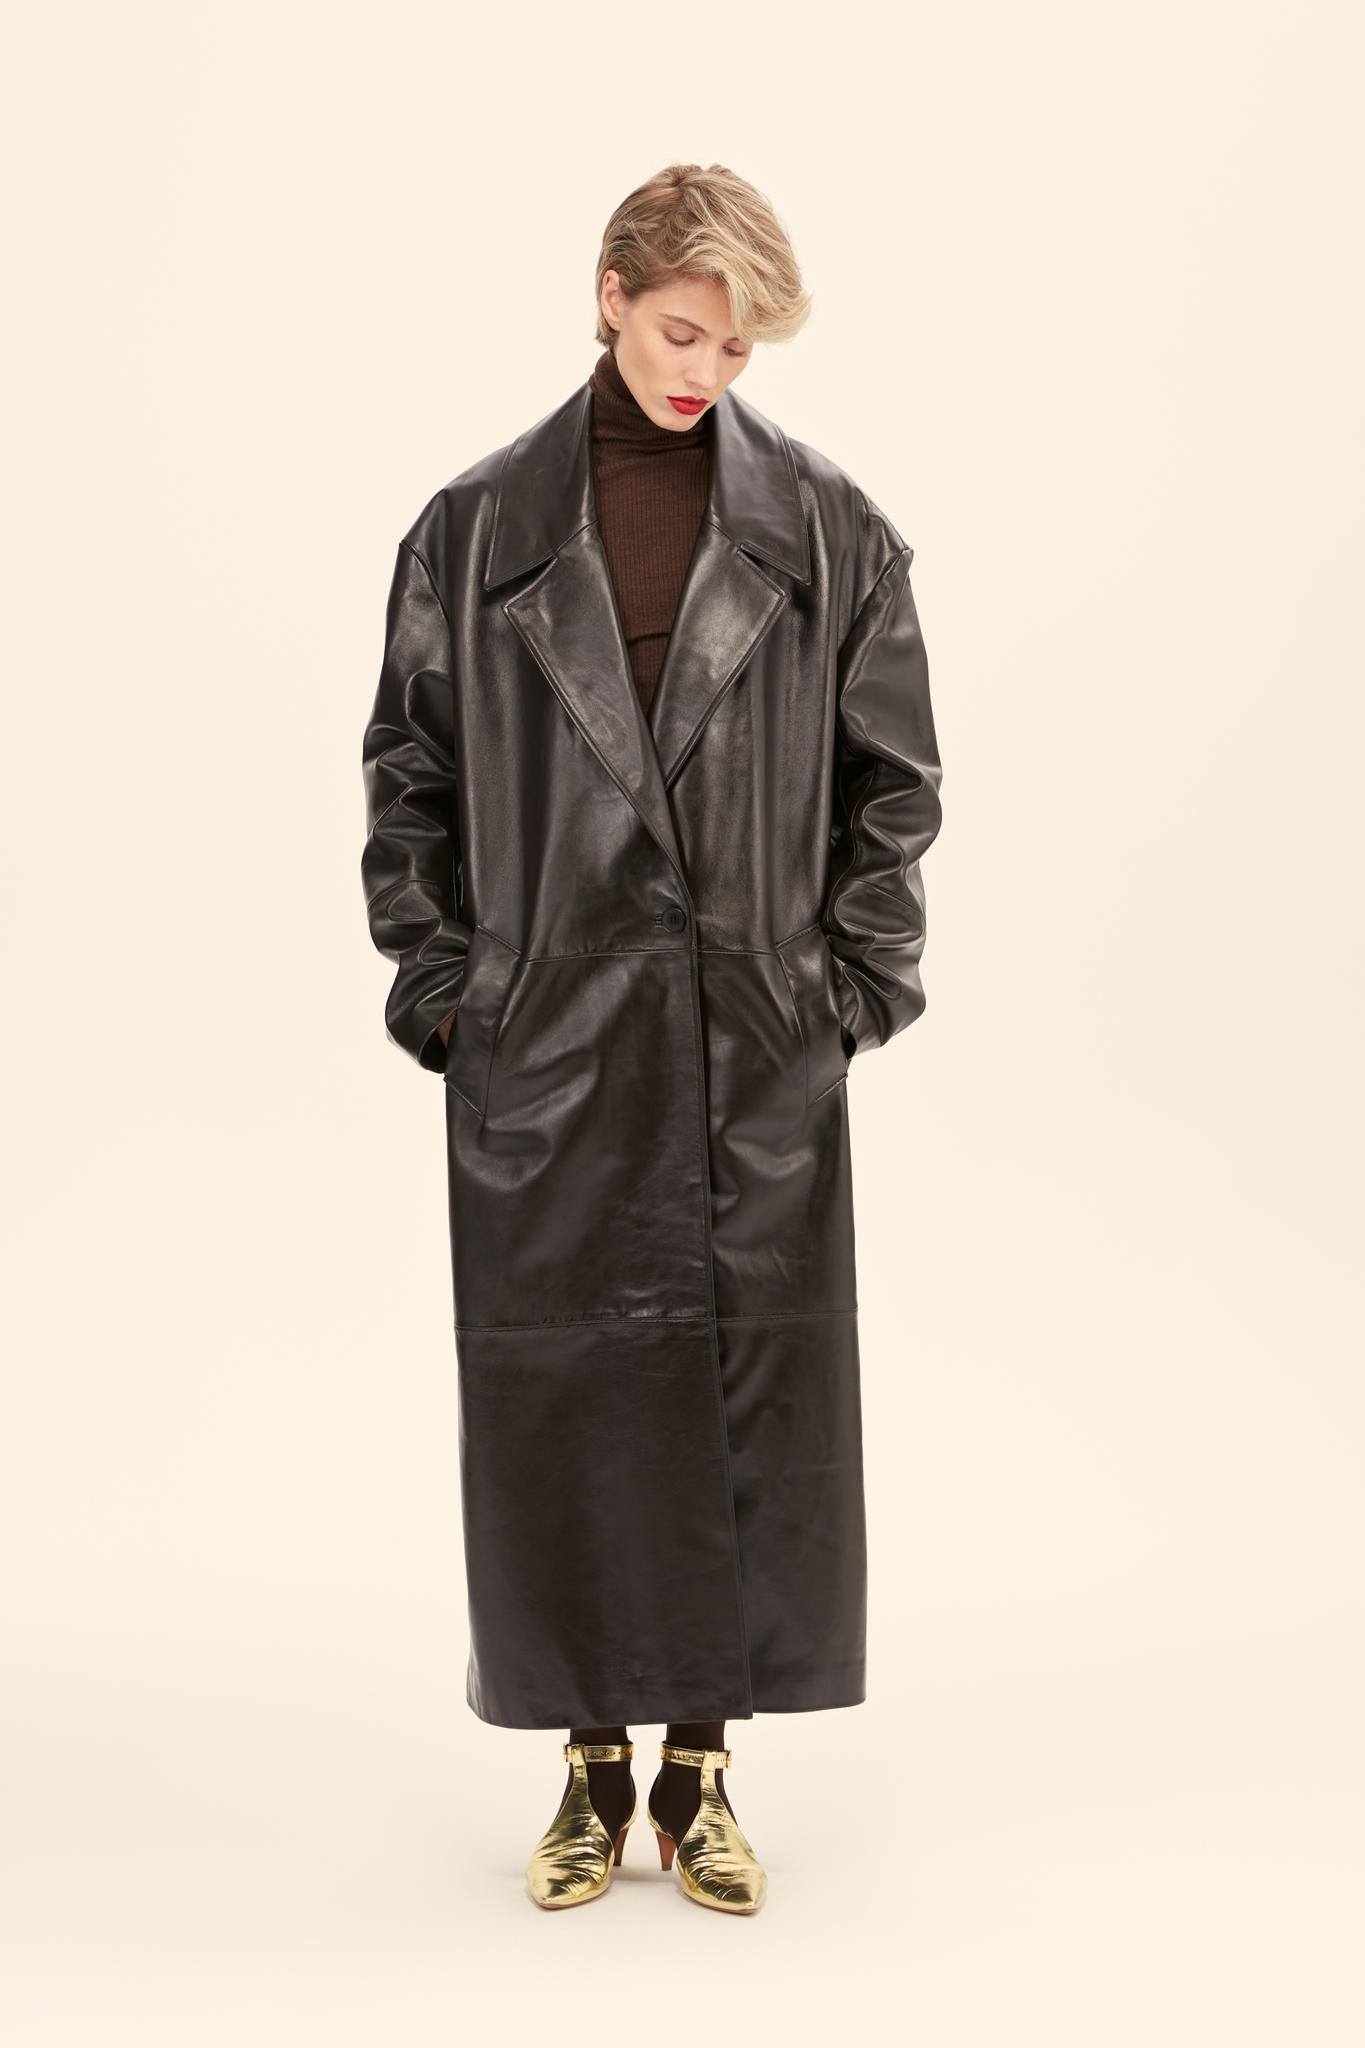 Leather trench coat, Choux, RUB 119,980.  (choux.ru)